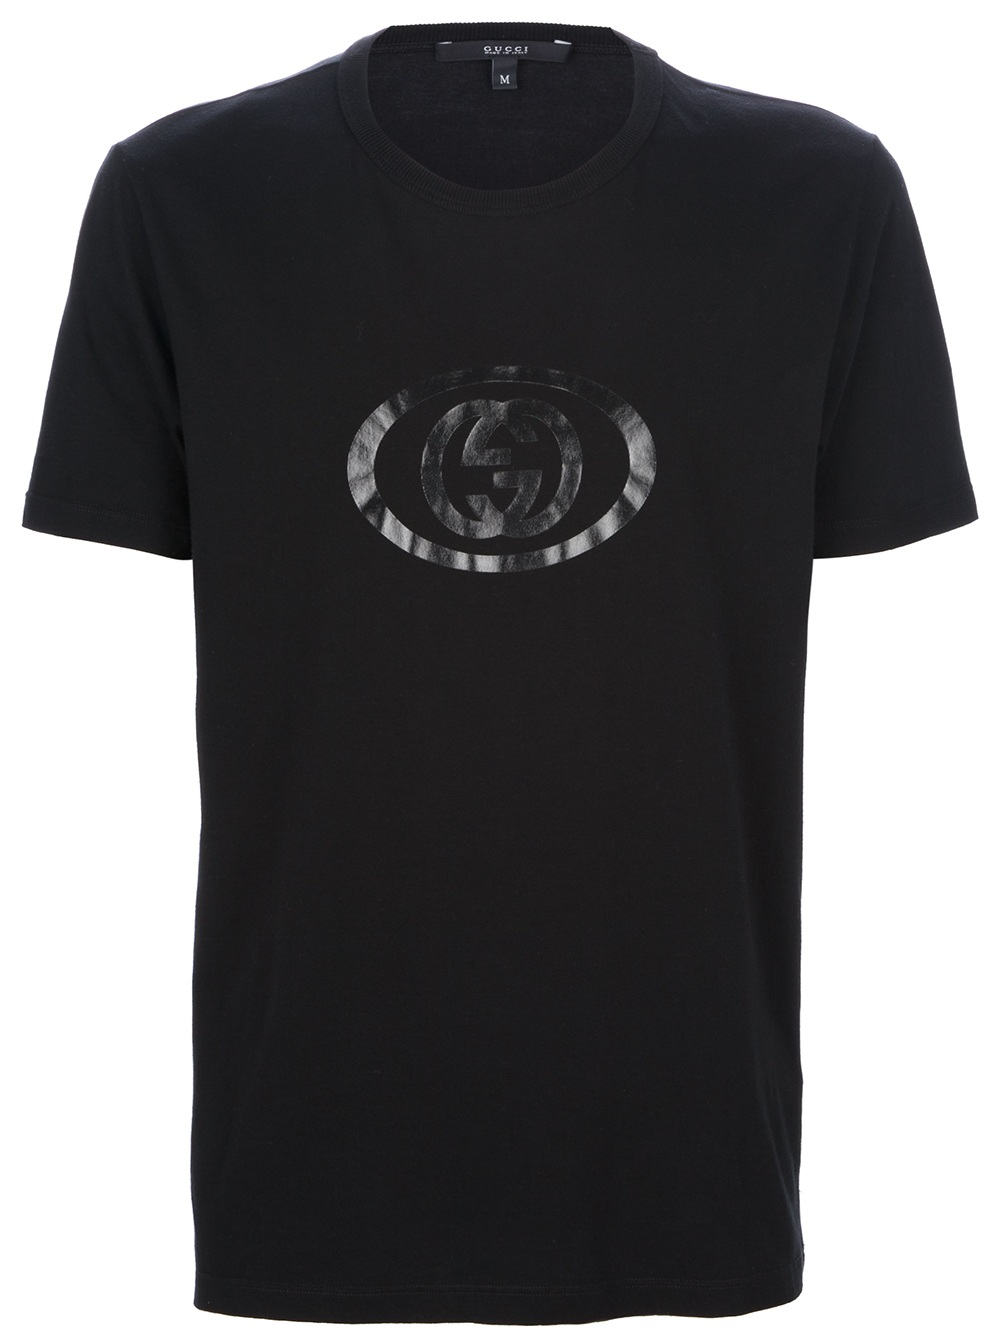 Lyst - Gucci Logo T-shirt in Black for Men